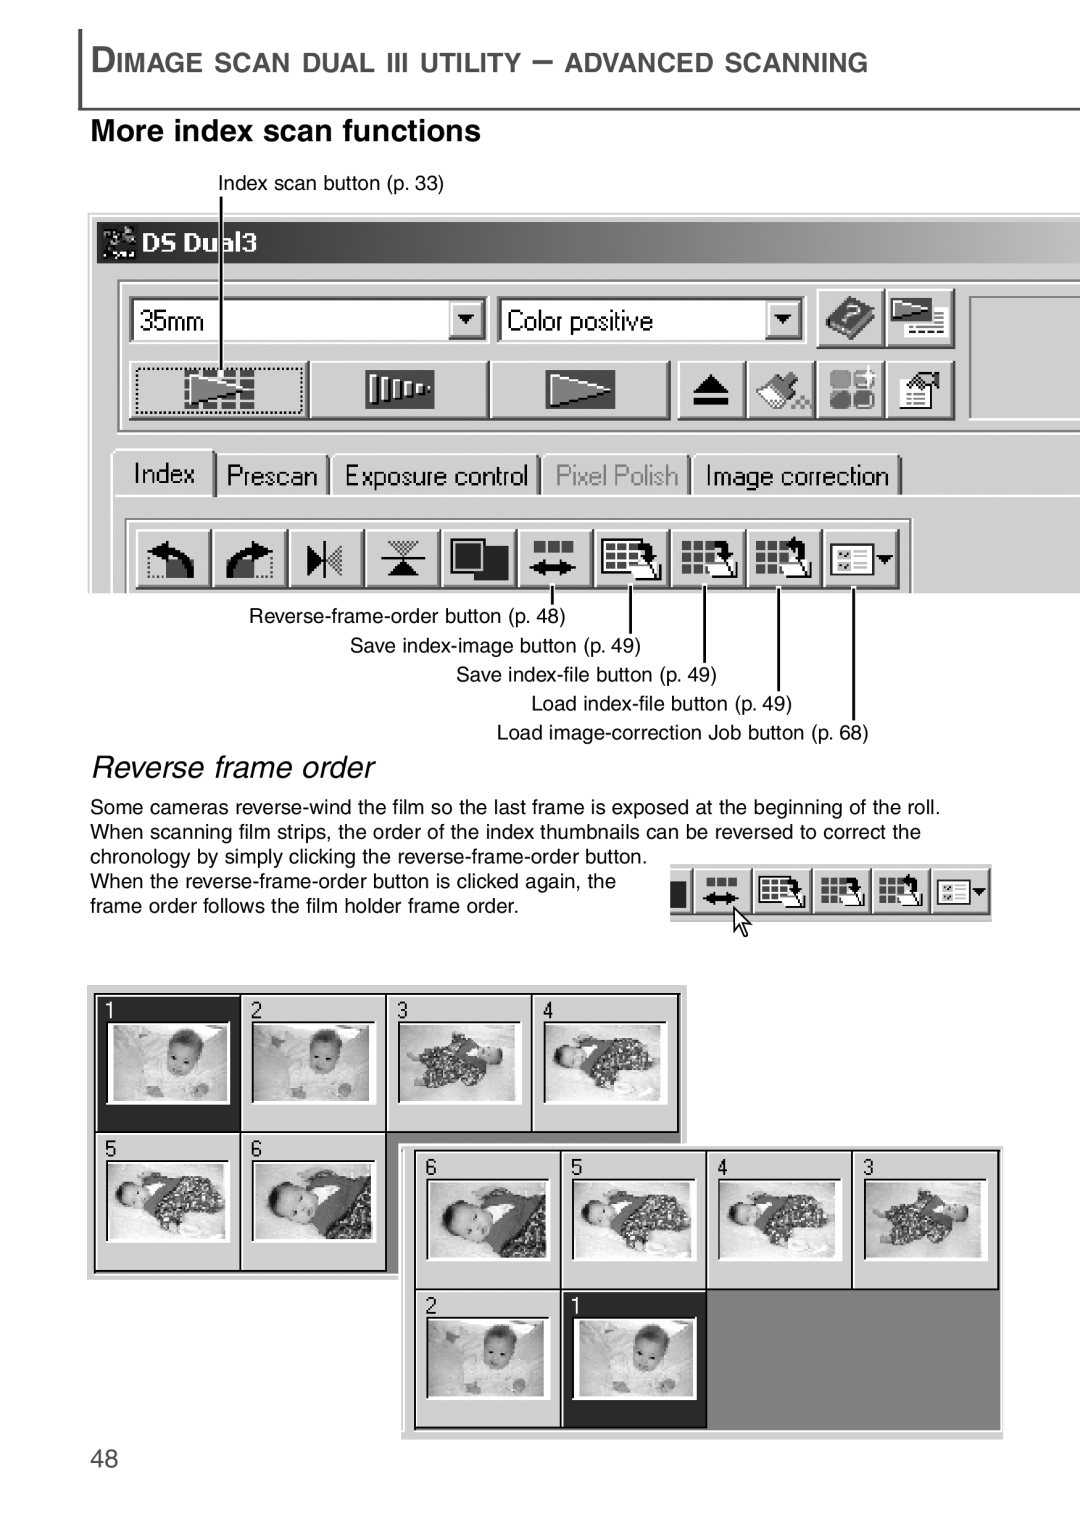 Konica Minolta AF-2840 More index scan functions, Reverse frame order, Dimage Scan Dual Iii Utility – Advanced Scanning 